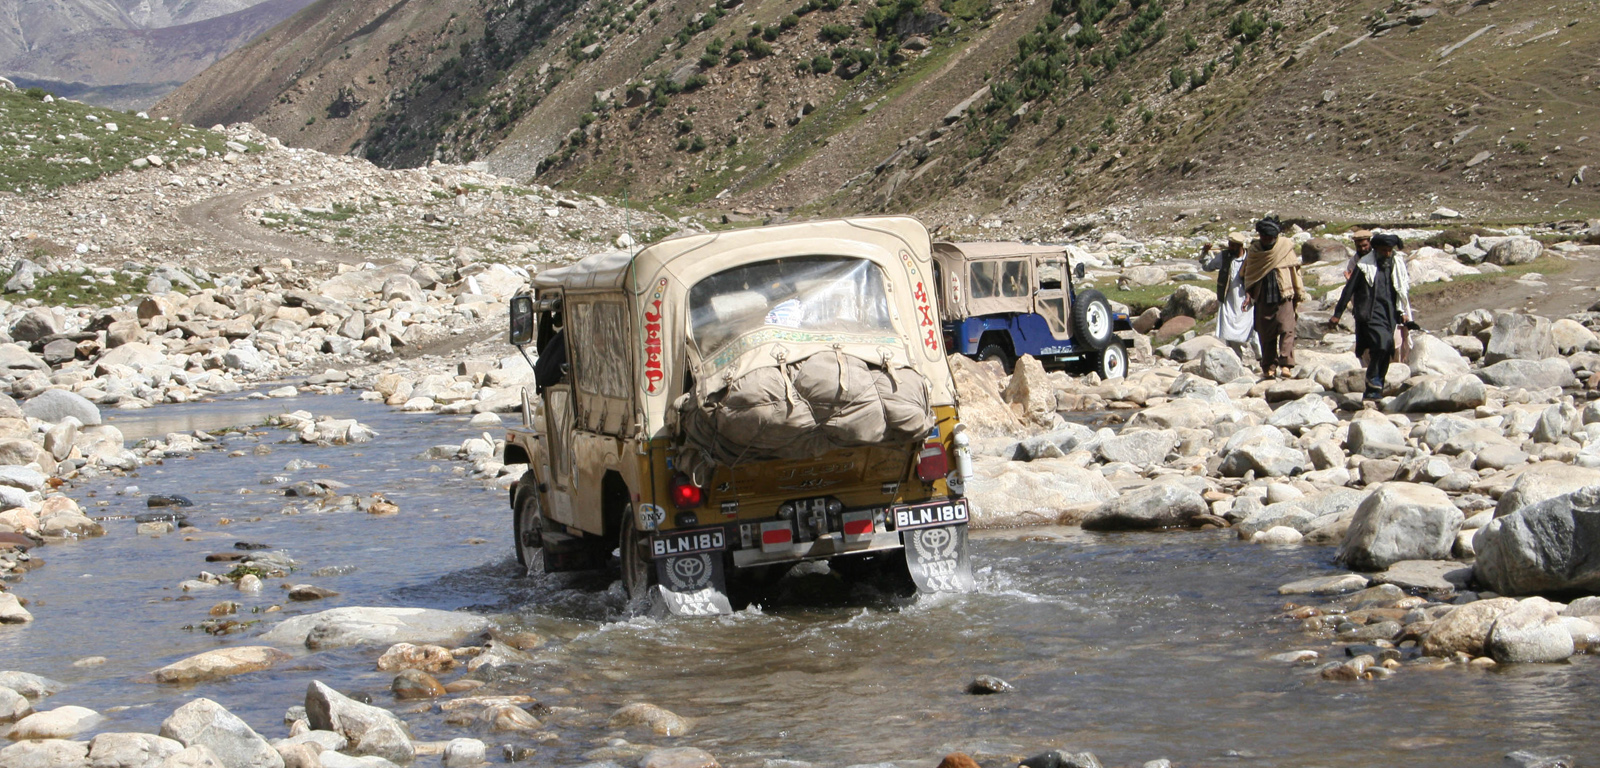 jeep-safari-4